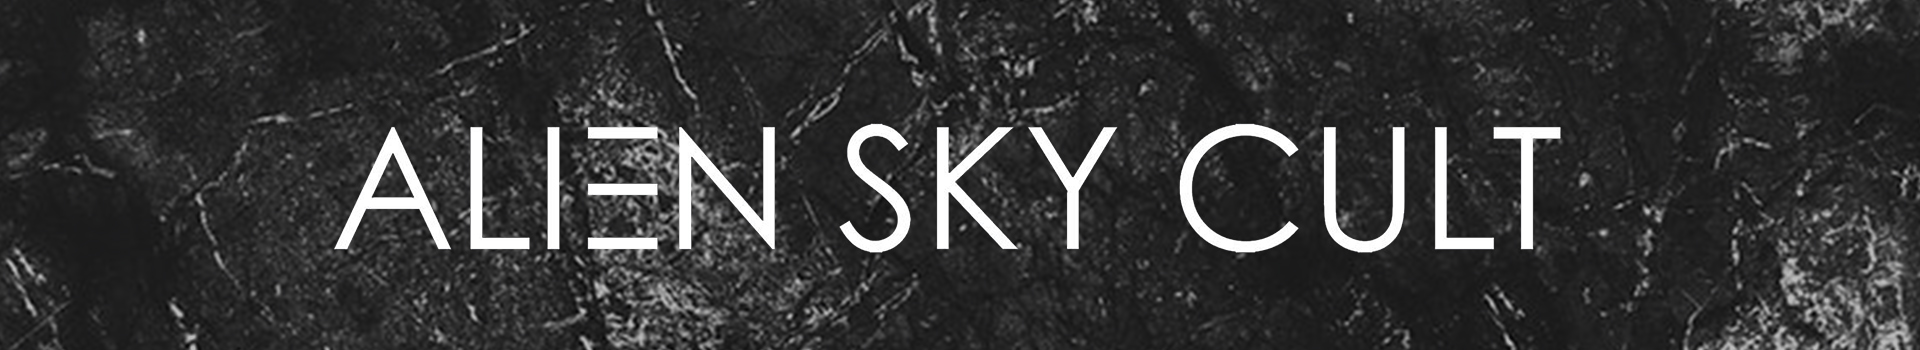 Alien Sky Cult - Official Merchandise